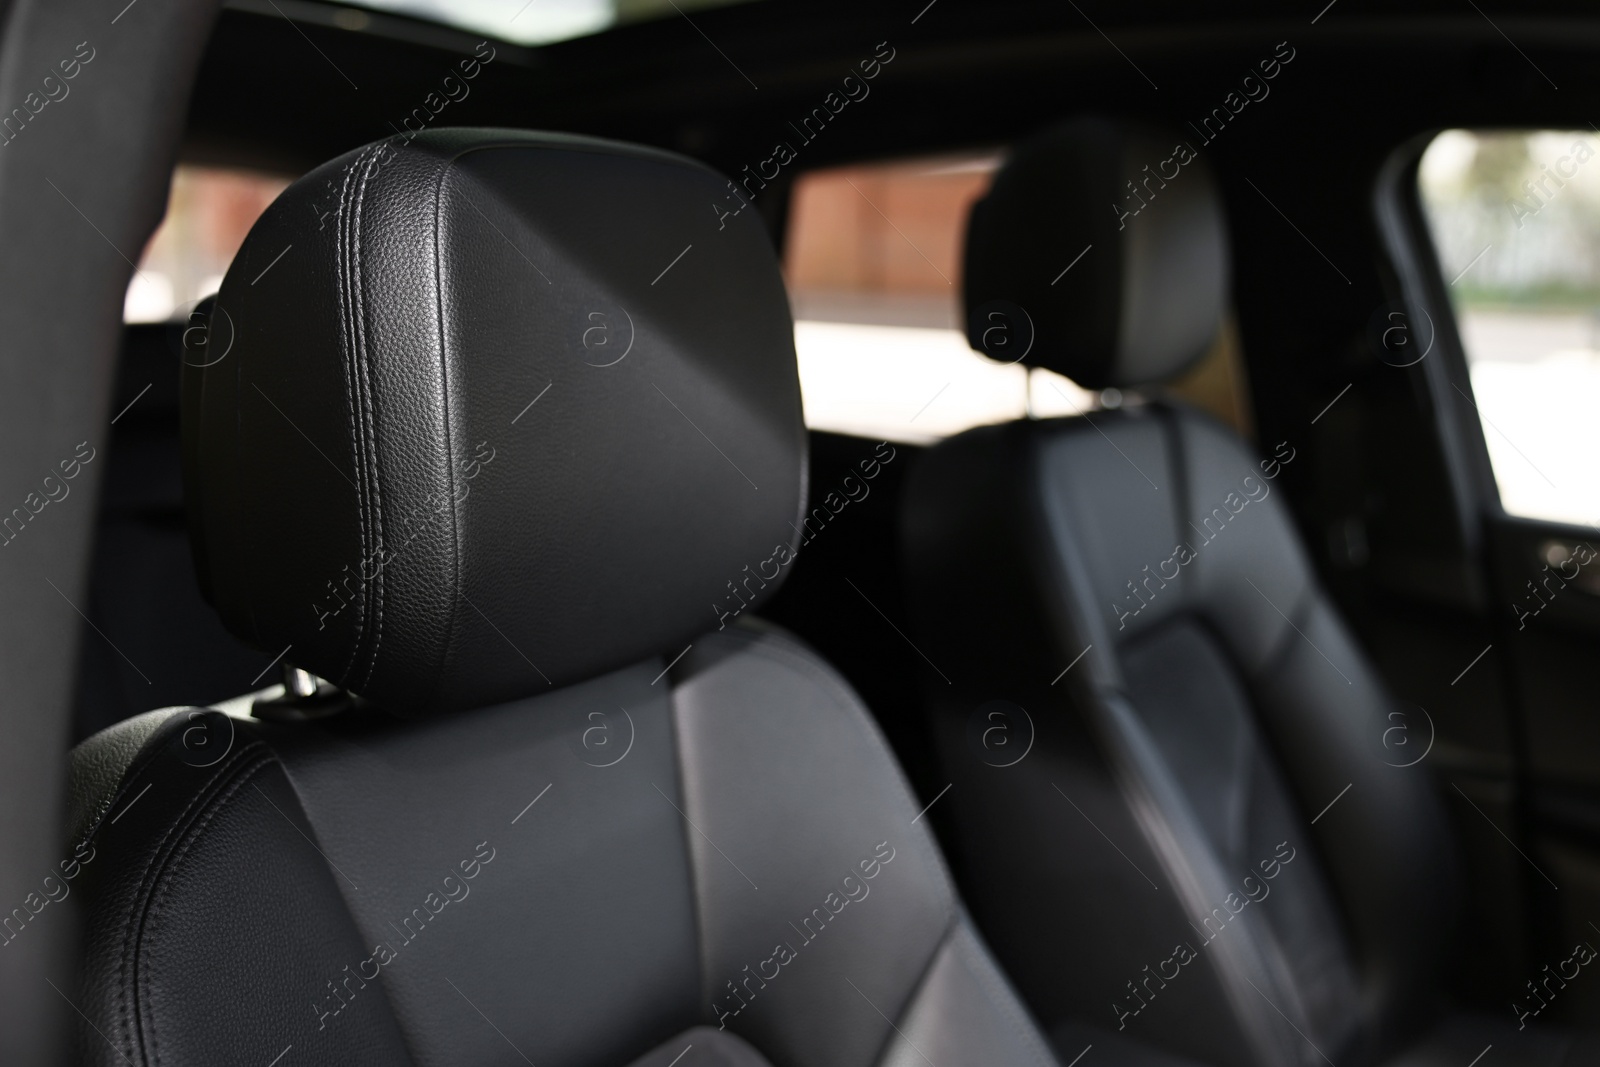 Photo of Seats inside of modern black car, closeup view